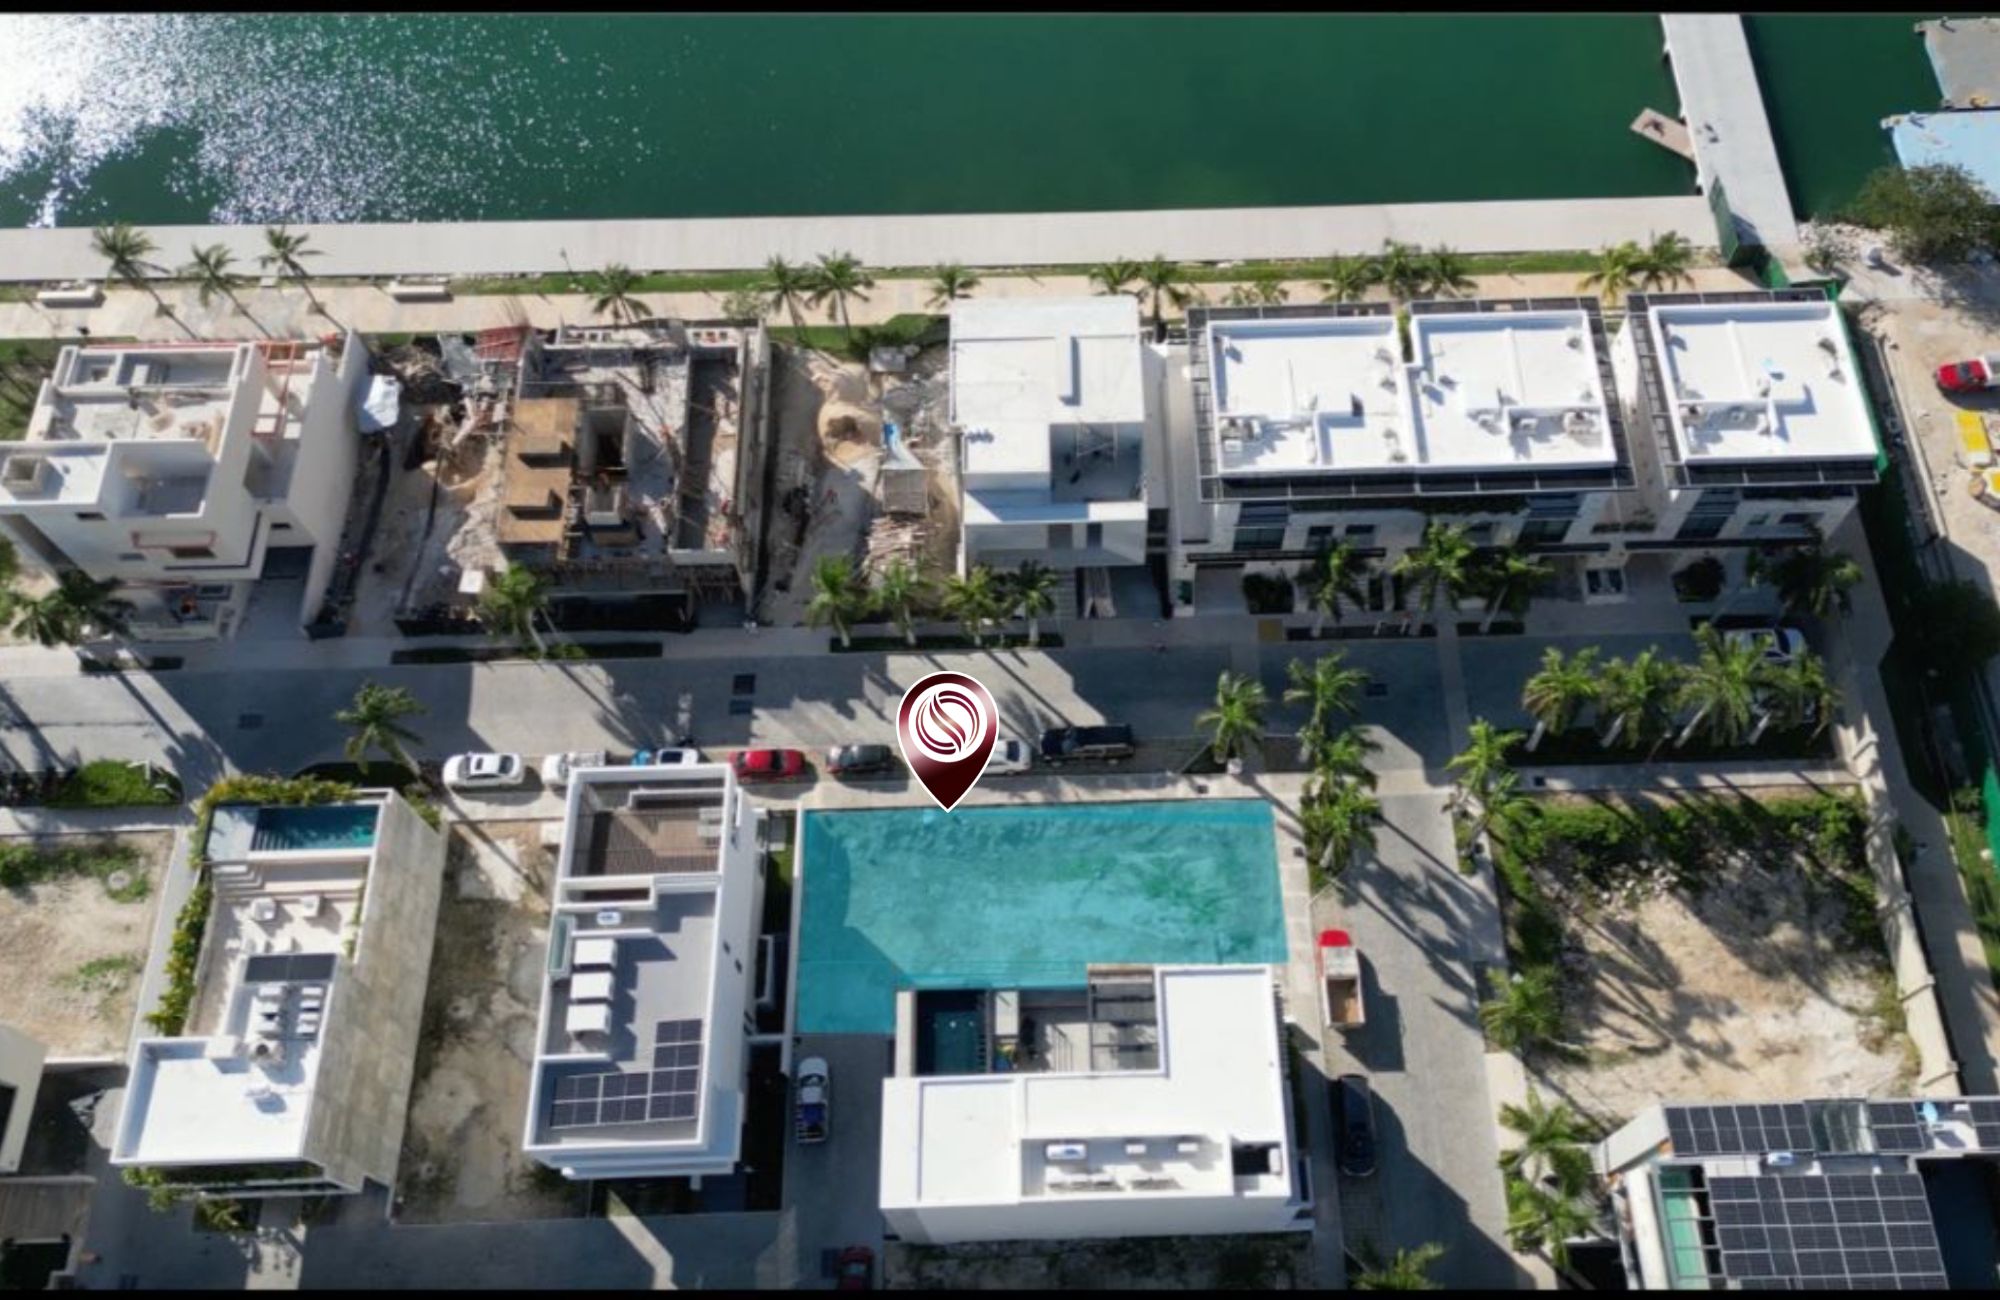 Terreno frente al lago, 1,171 m2 en residencial privado con amenidades para toda a familia, casa club, canchas deportivas, spa